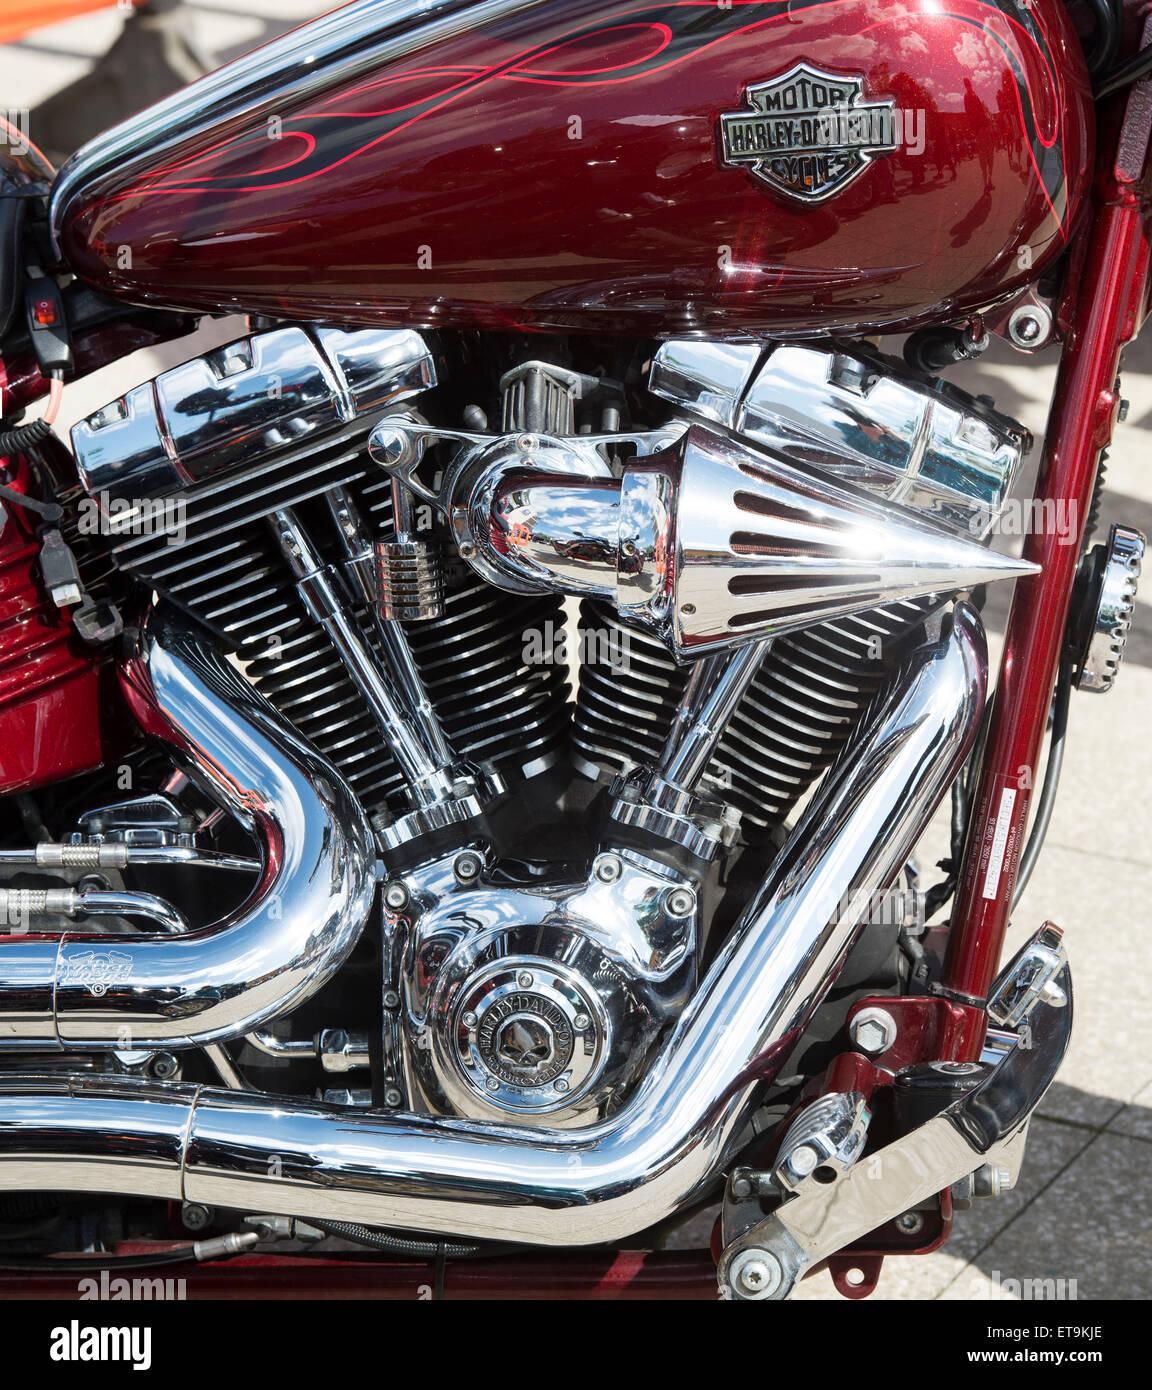 Harley Davidson motorcycle chrome v twin engine Stock Photo